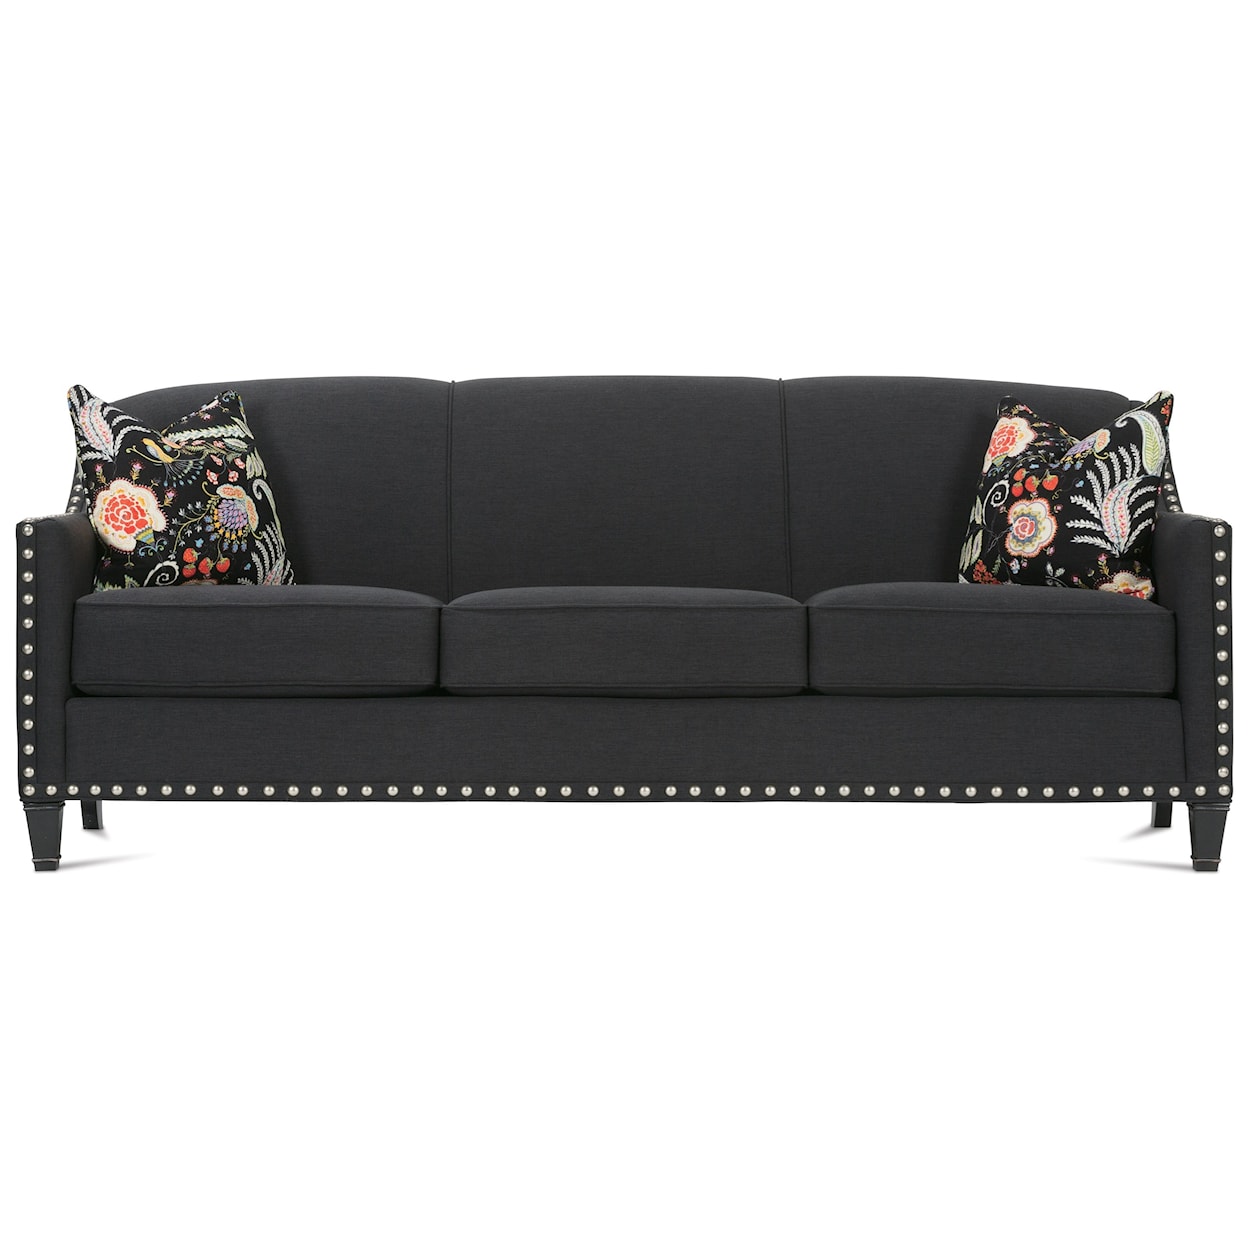 Rowe Rockford Traditional Upholstered Sofa